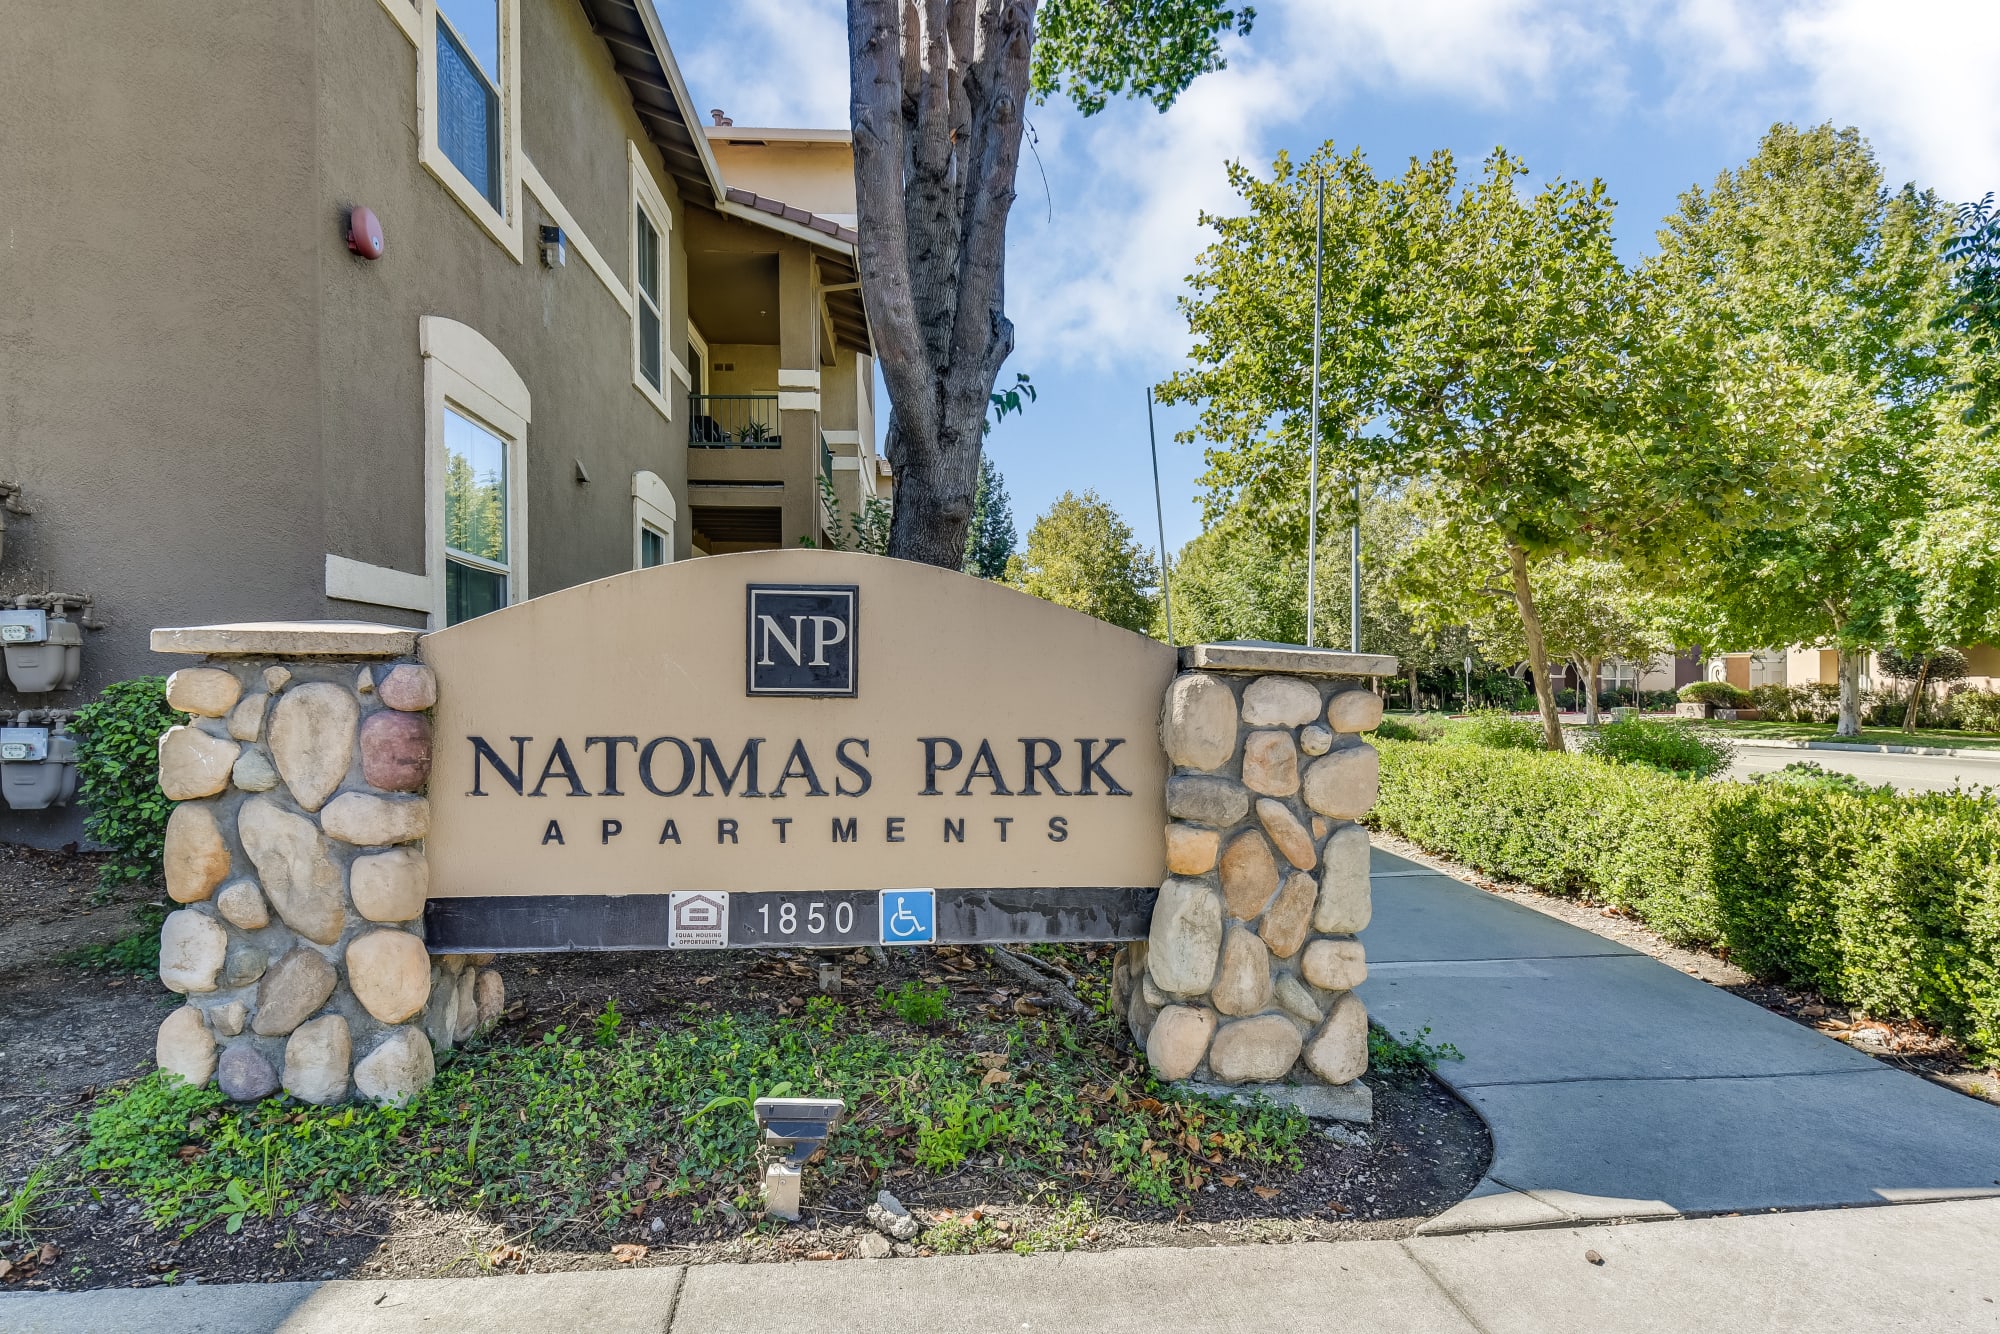 The monument sign at Natomas Park Apartments in Sacramento, California